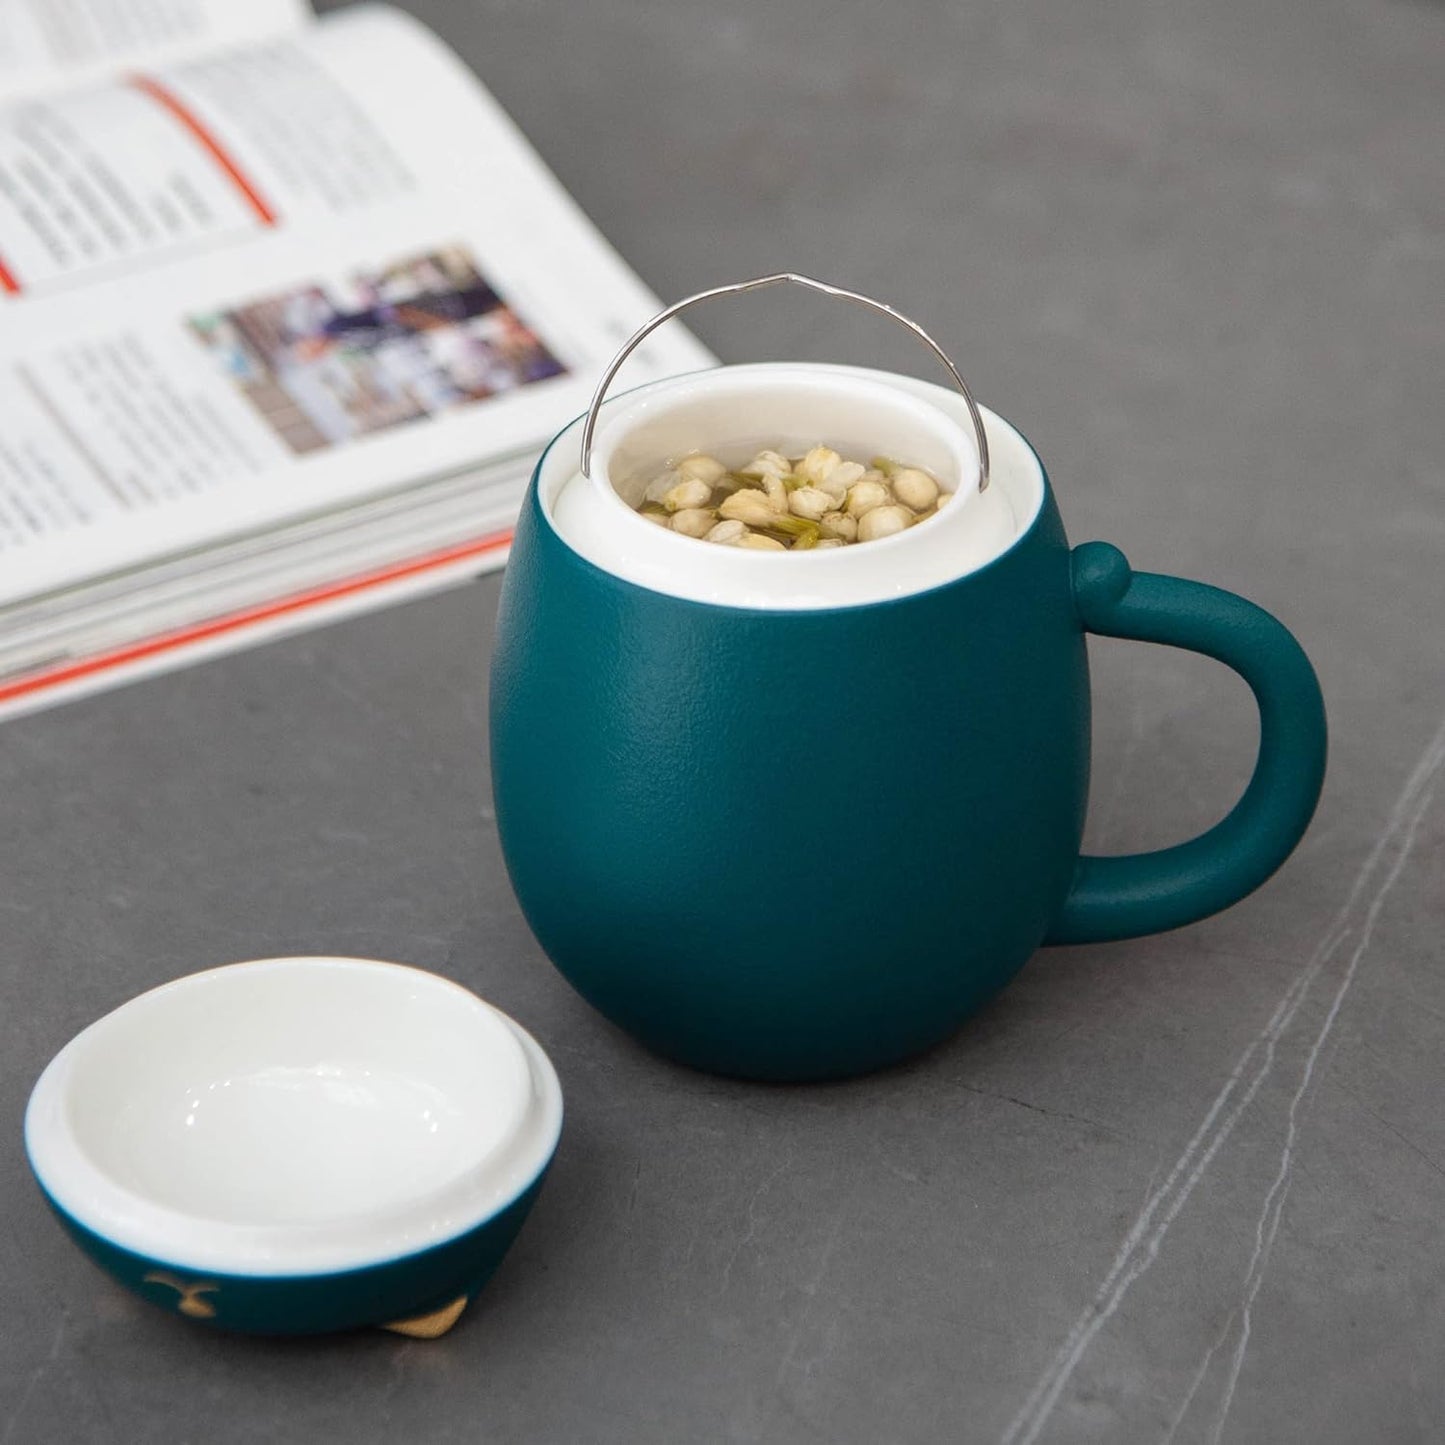 Cute Cat Ceramic Tea Mug with Infuser, Lid for Loose Leaf Tea